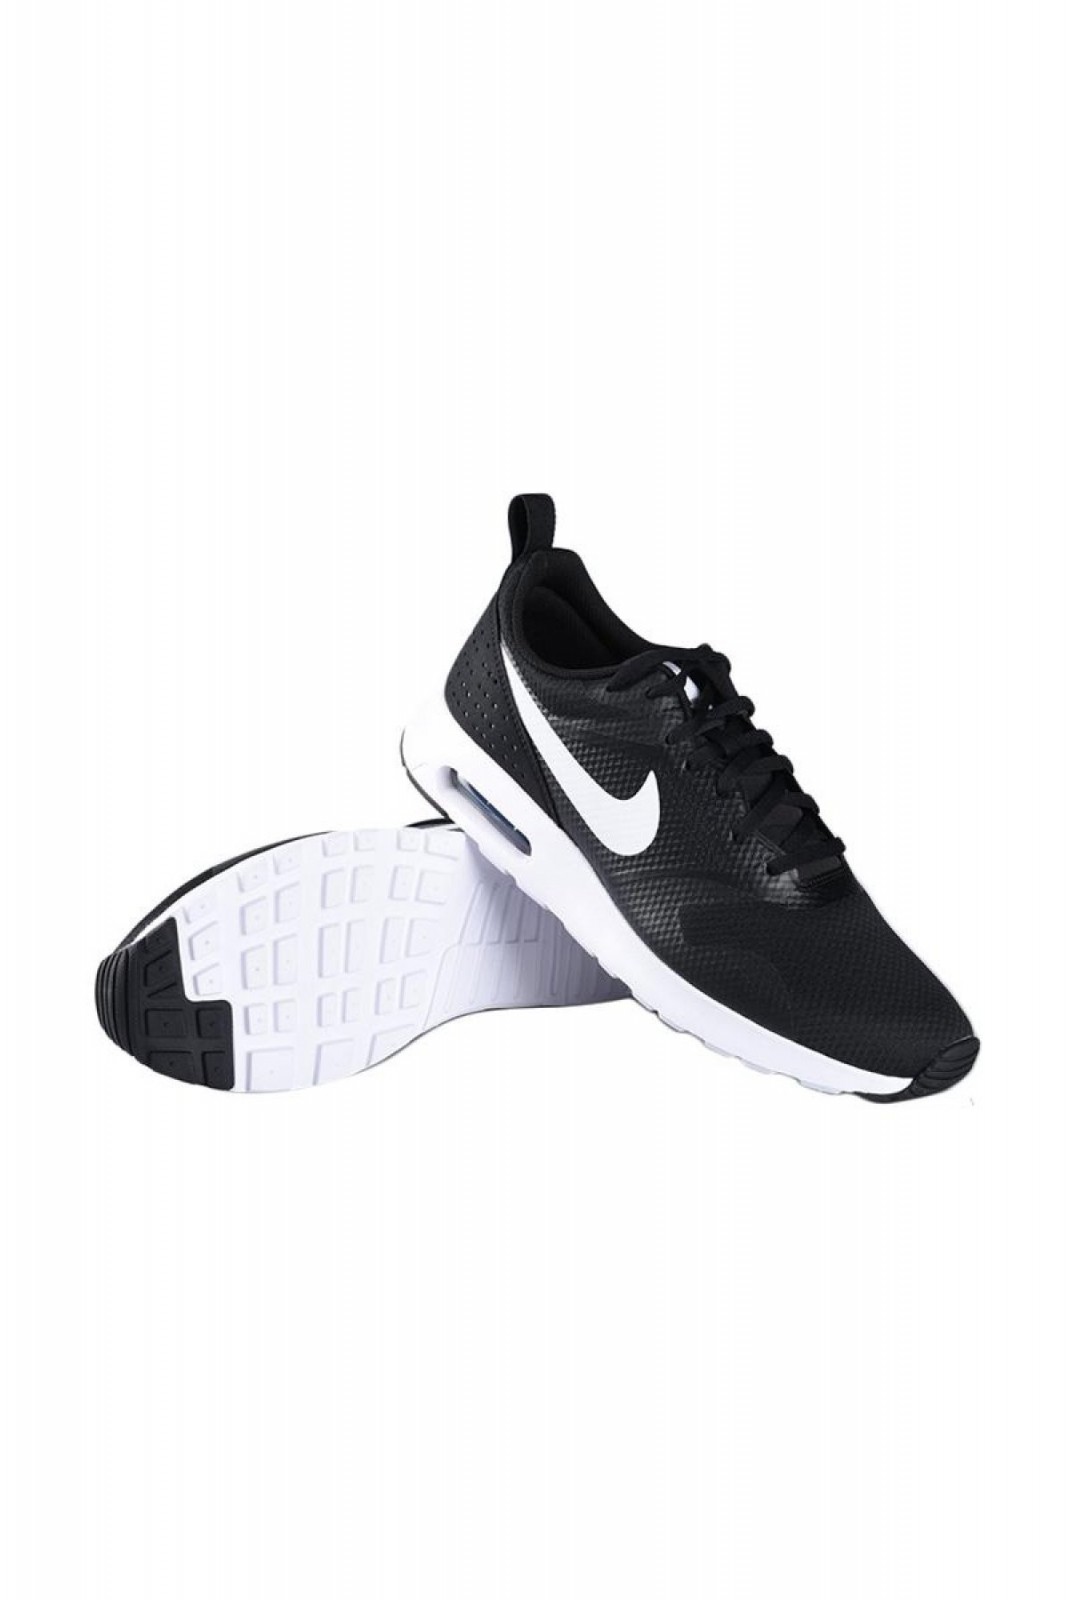 AIR MAX TAVAS Nike 009 BLACK/WHITE-BLACK 705149